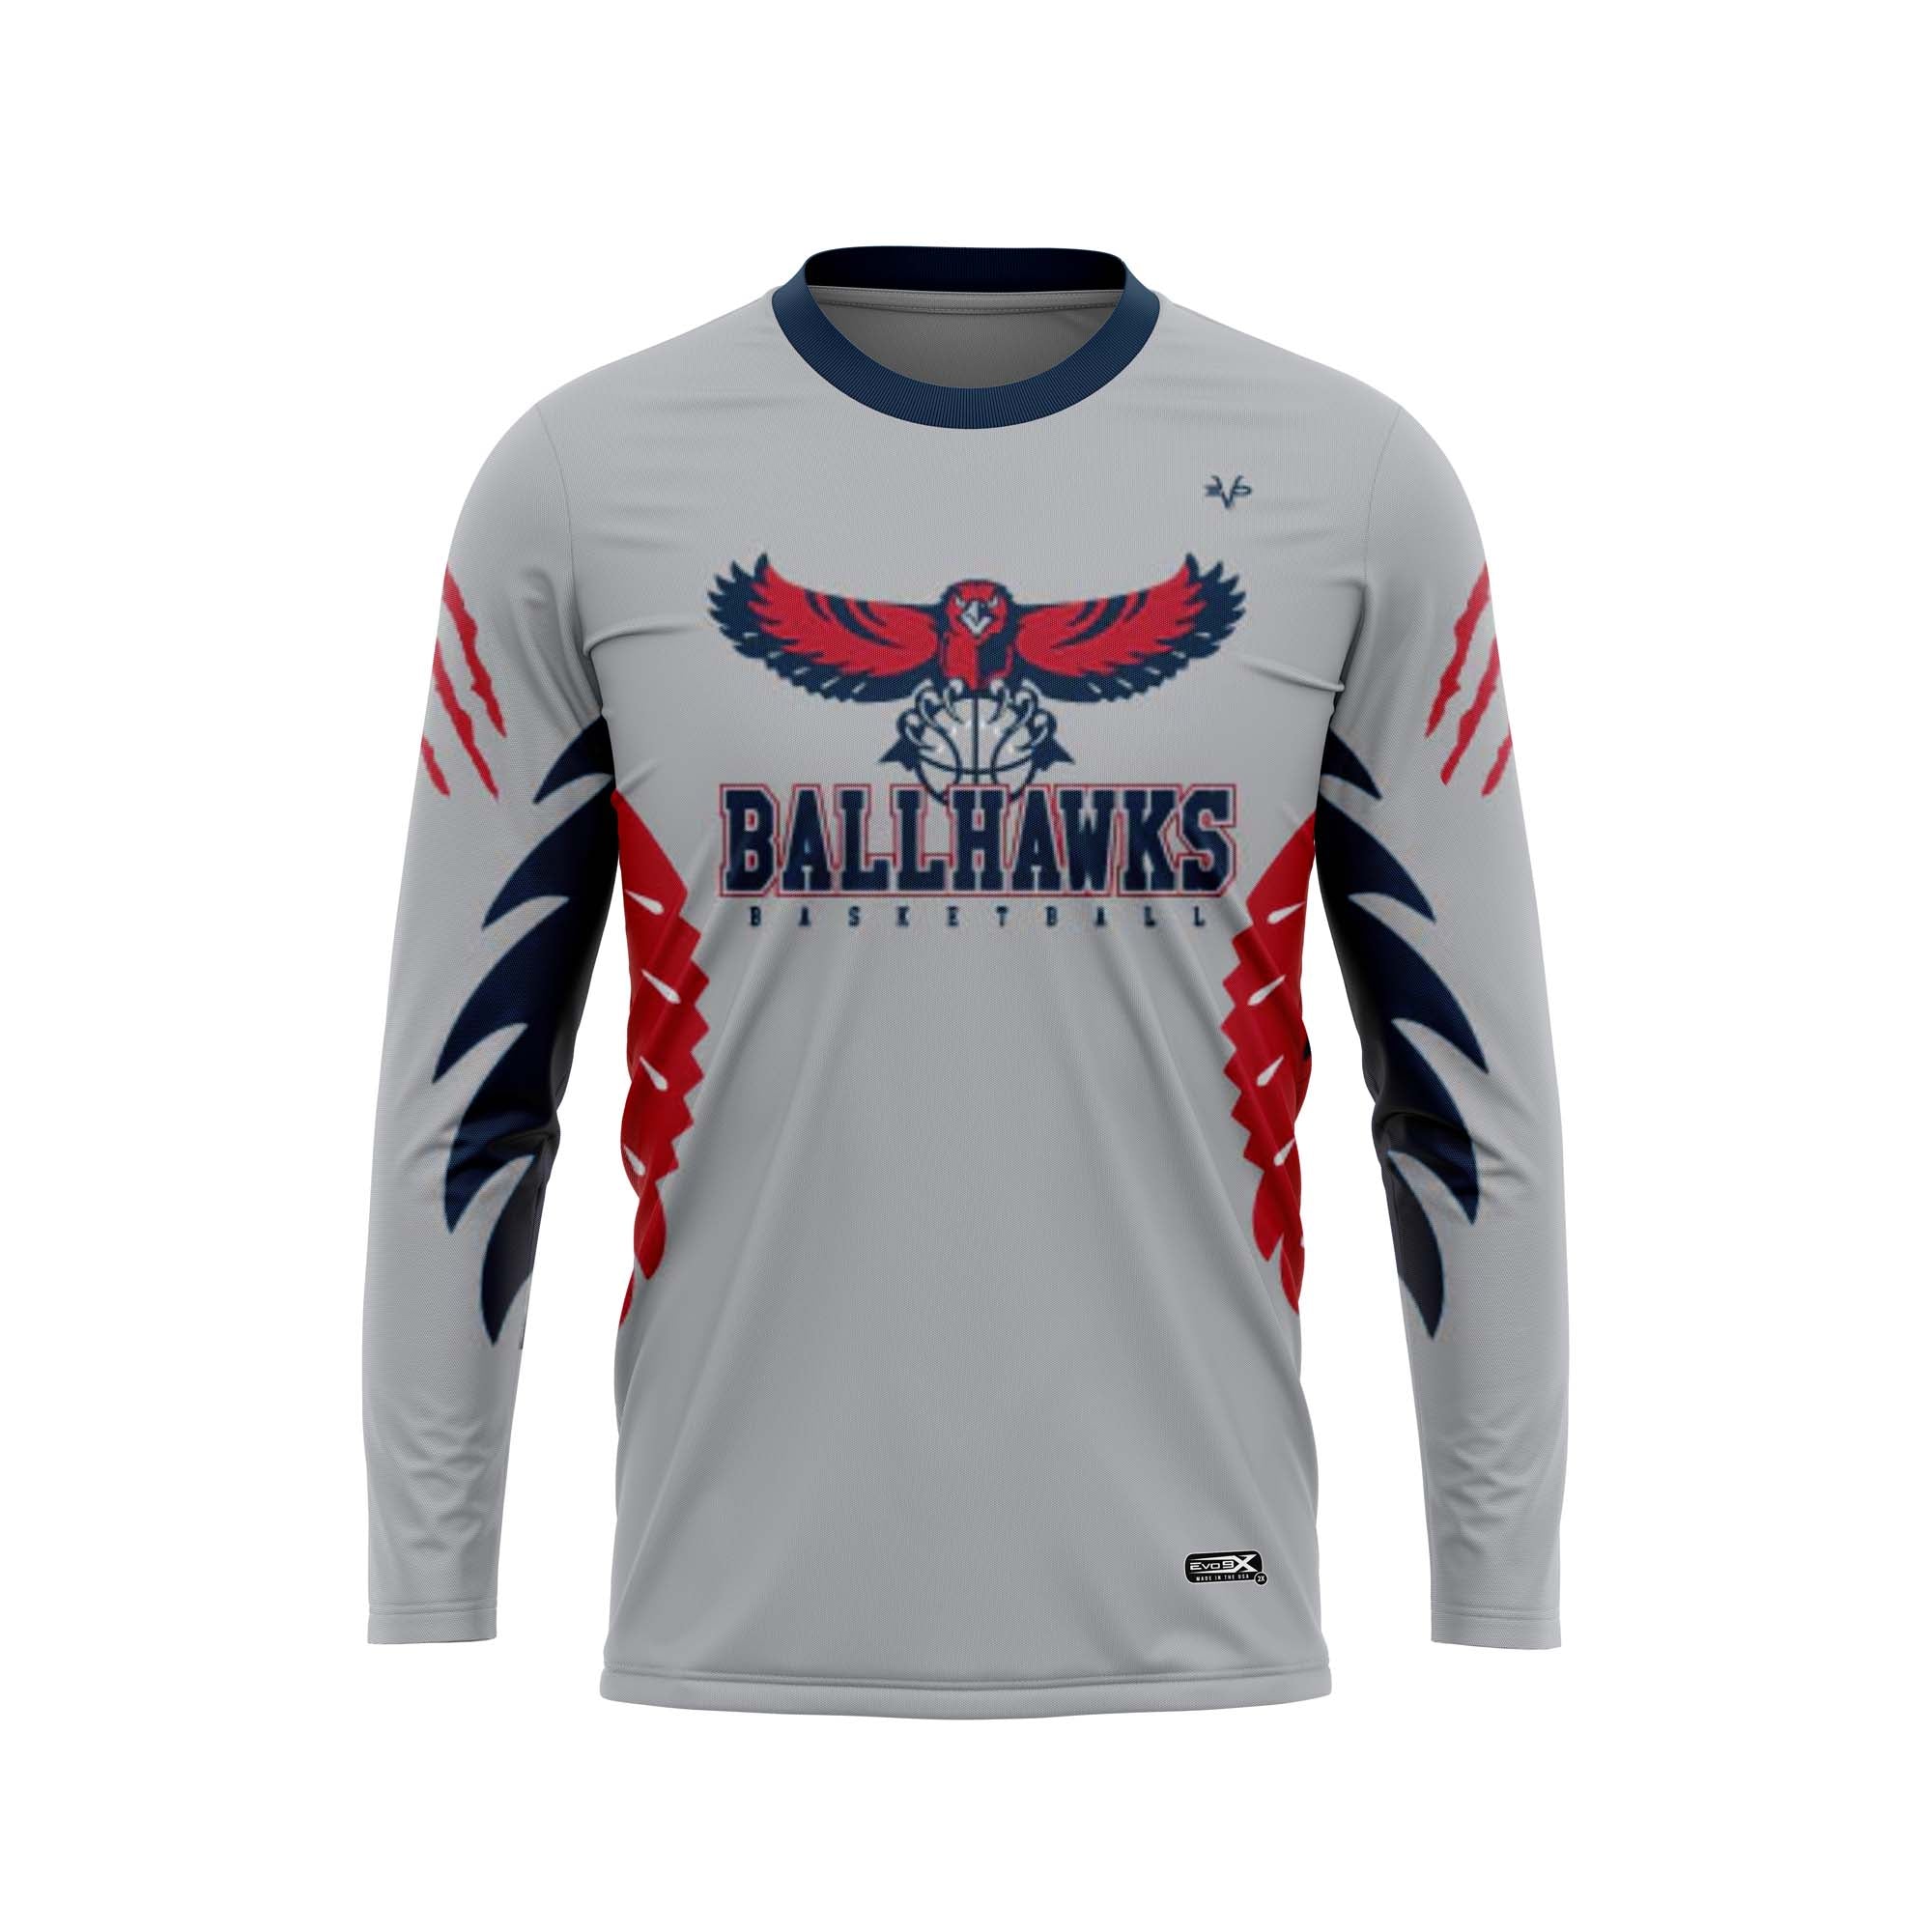 DAVINCI BALLHAWKS BASKETBALL Sublimated Long Sleeve Jersey